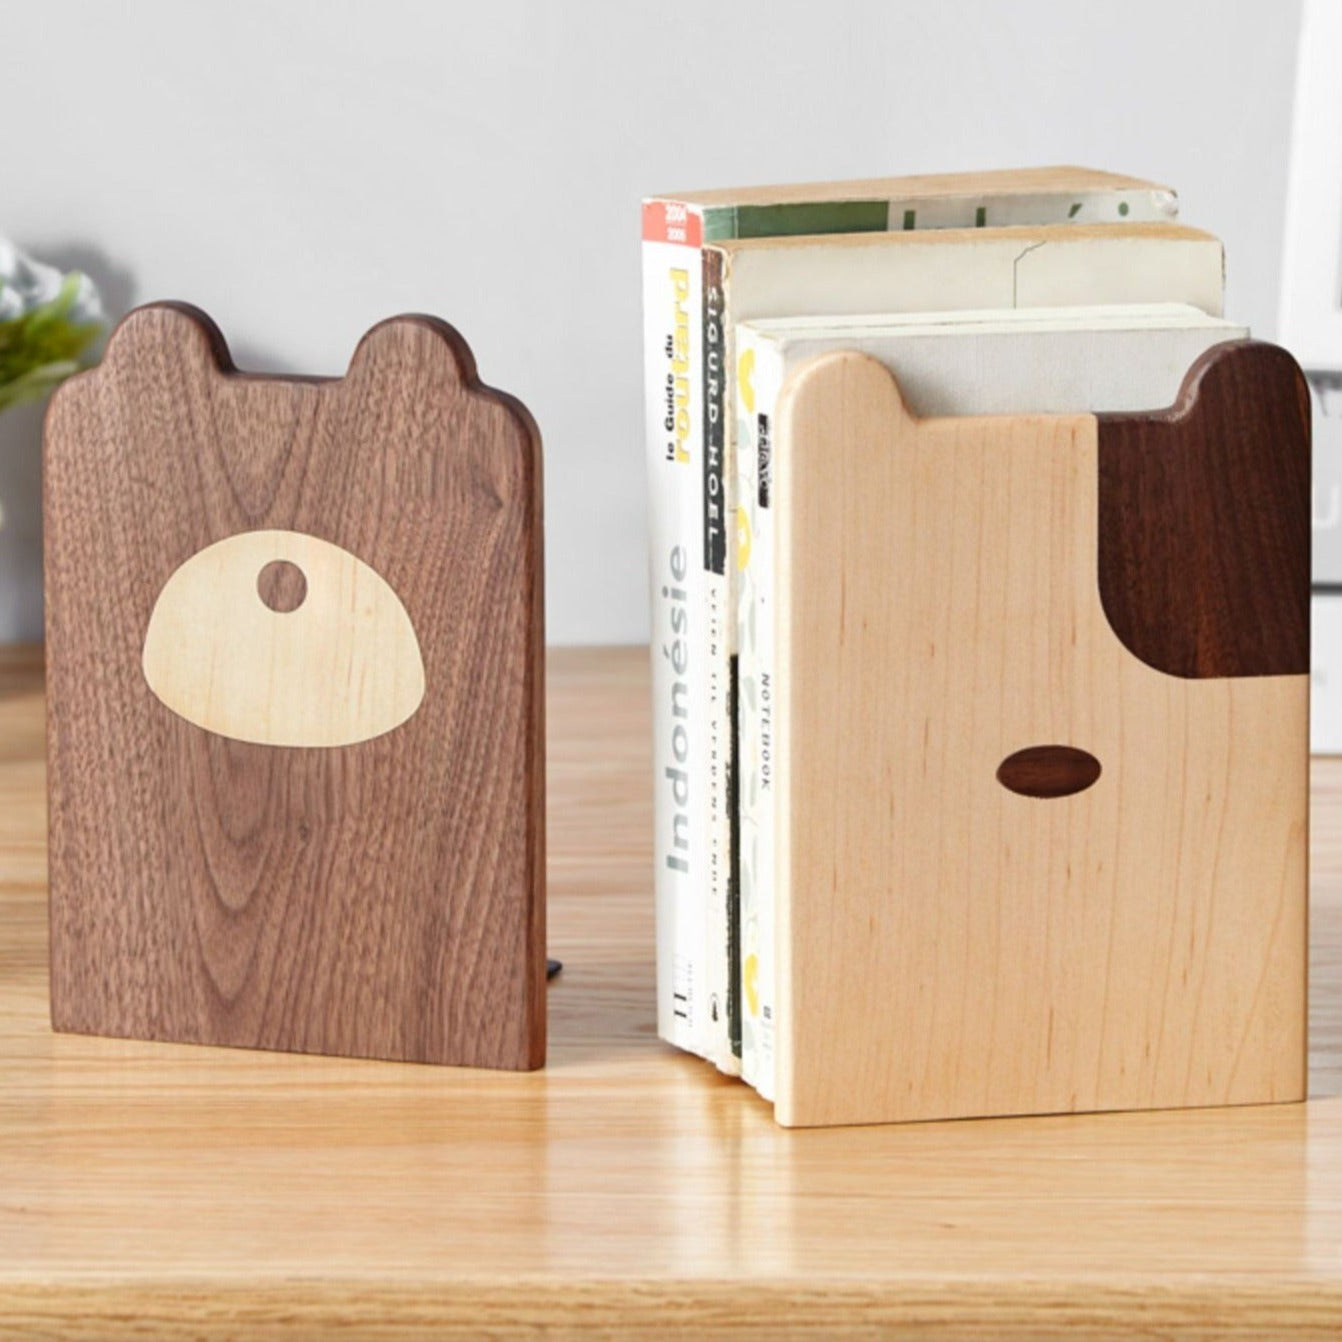 Solid wood book creative dog bear book clip"